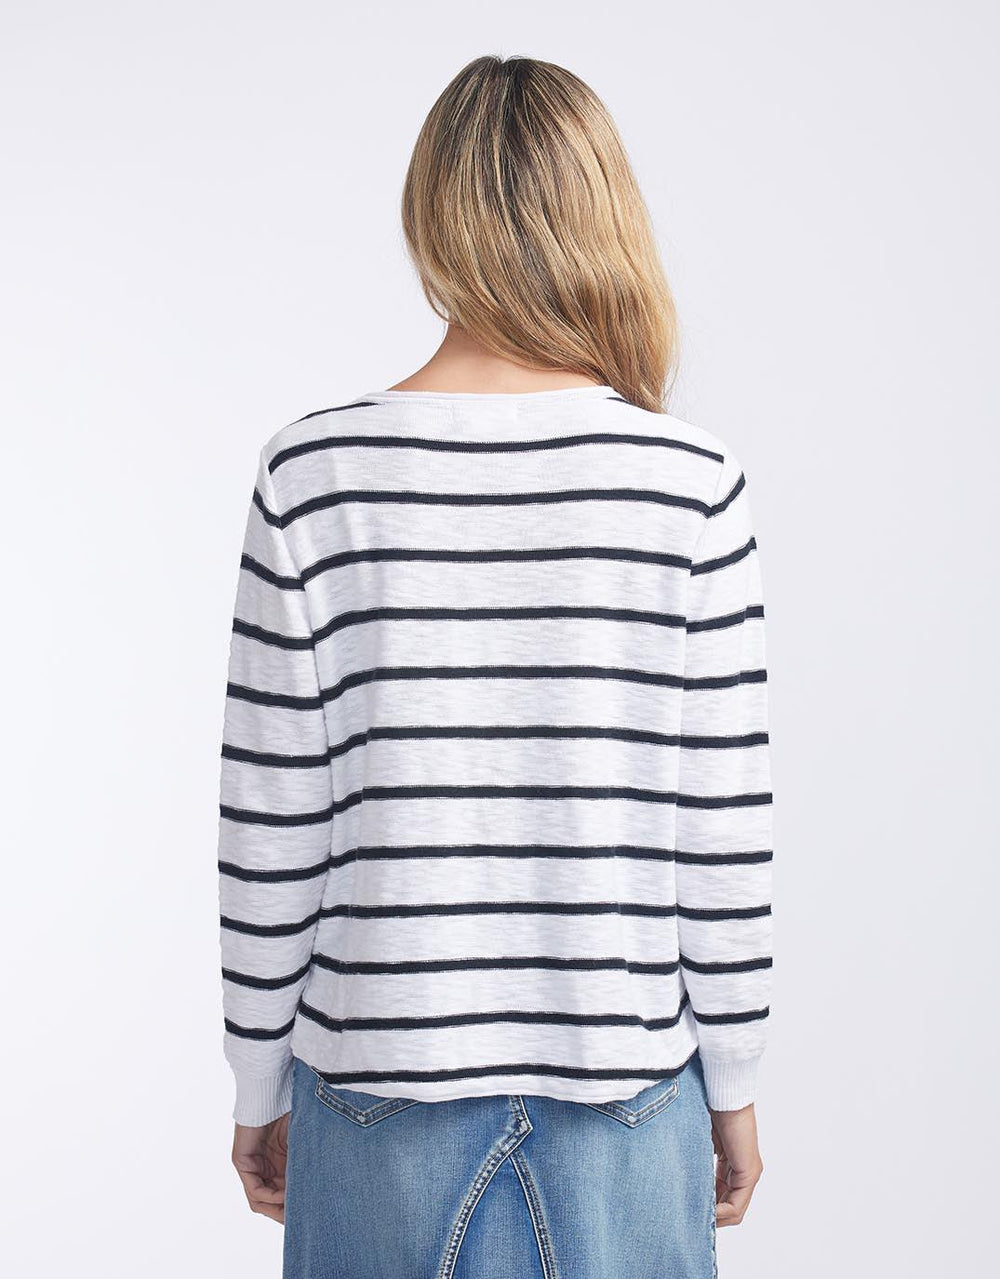 Little Lies - Nellie Summer Knit - White/Black Stripe - White & Co Living Knitwear